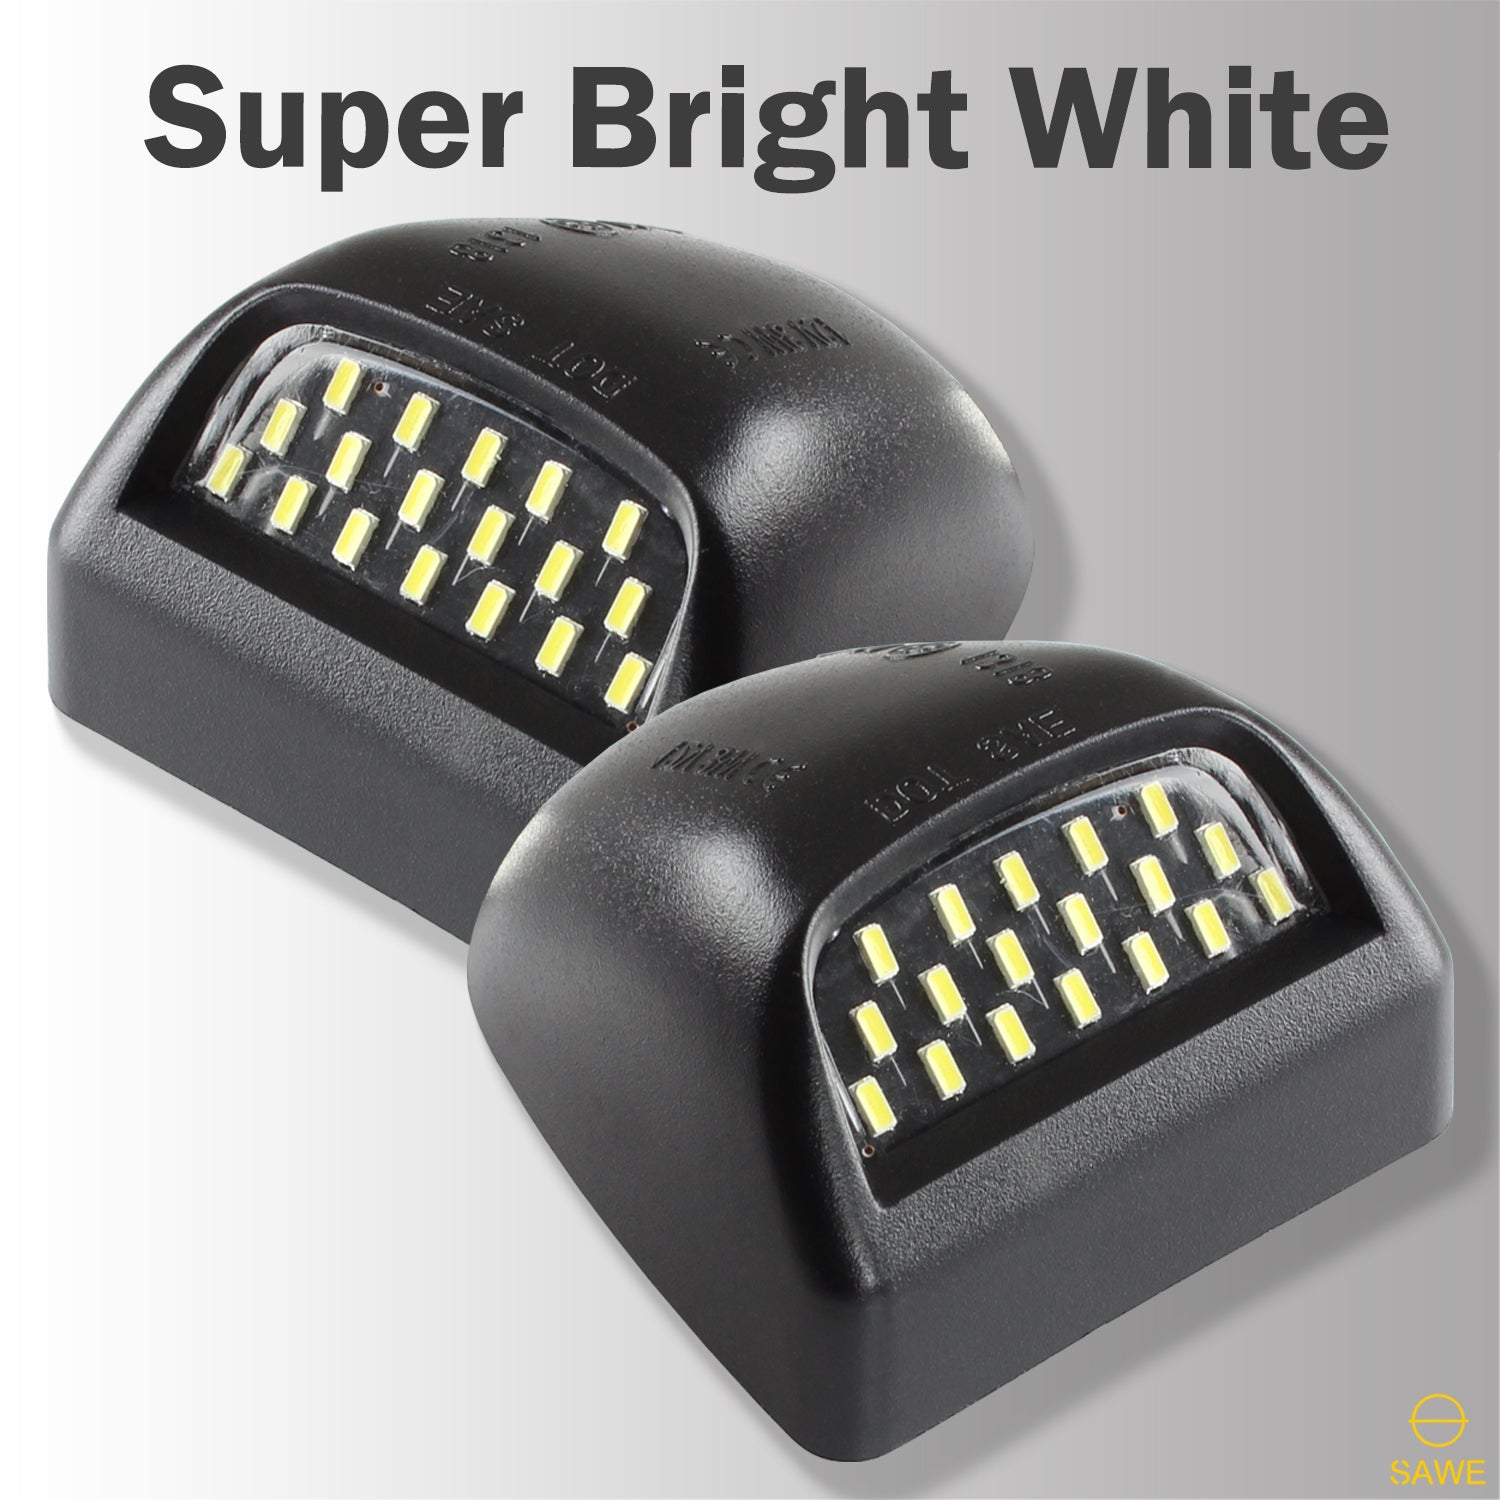 LED License Plate Light Housing Kit For Silverado Suburban Tahoe GMC Sierra Yukon 1500 2500 3500 - White